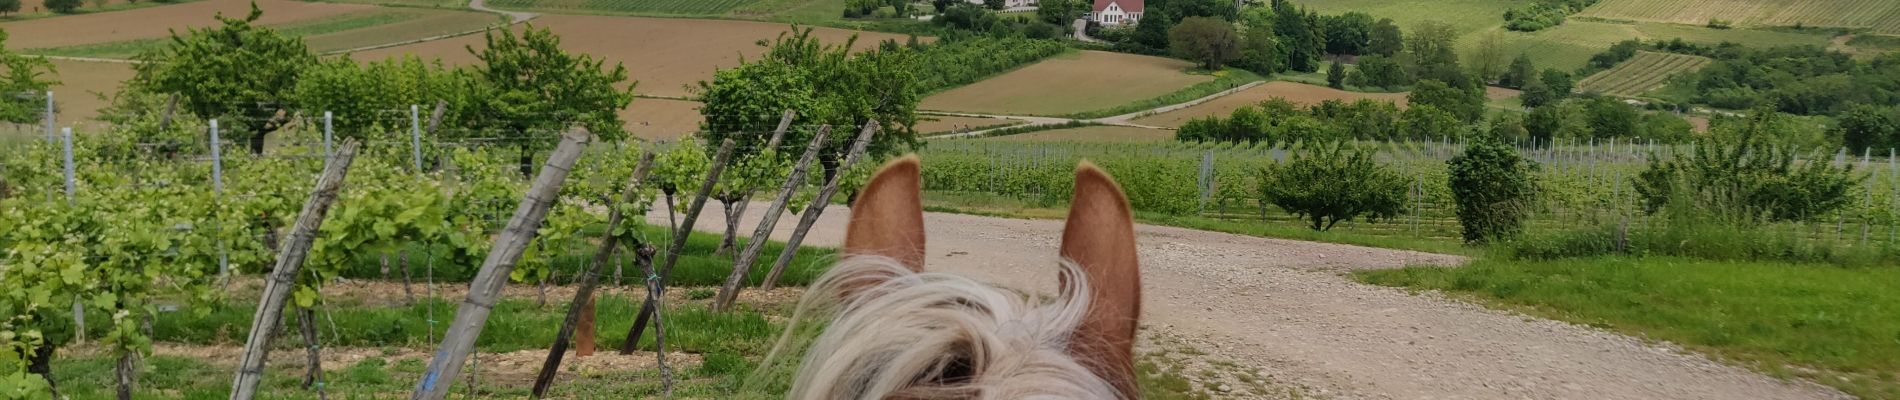 Tour Reiten Mollkirch - 2019-05-26 Balade Fête des mères - Photo